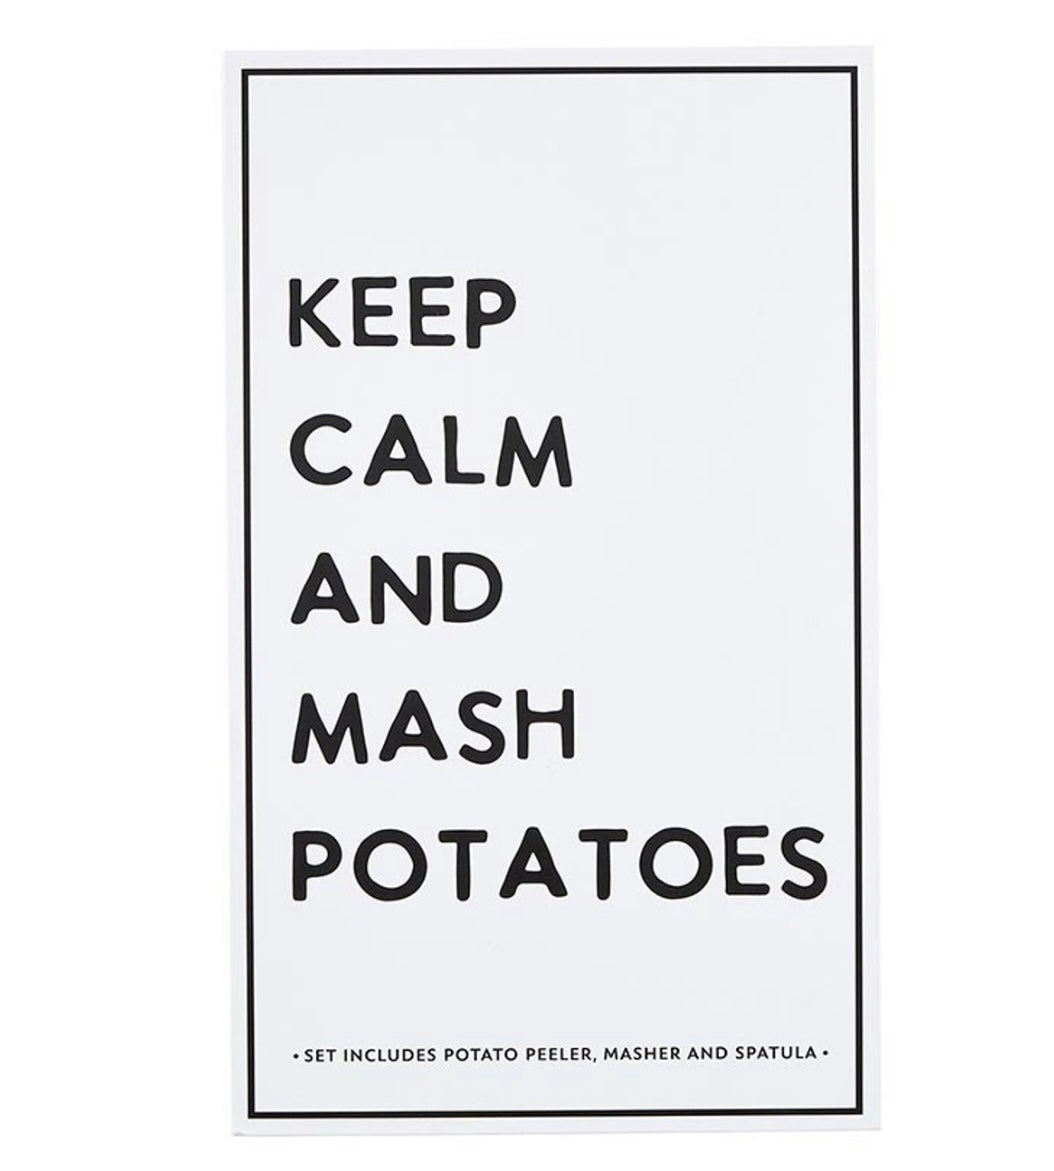 Mashed Potatoes Book Box